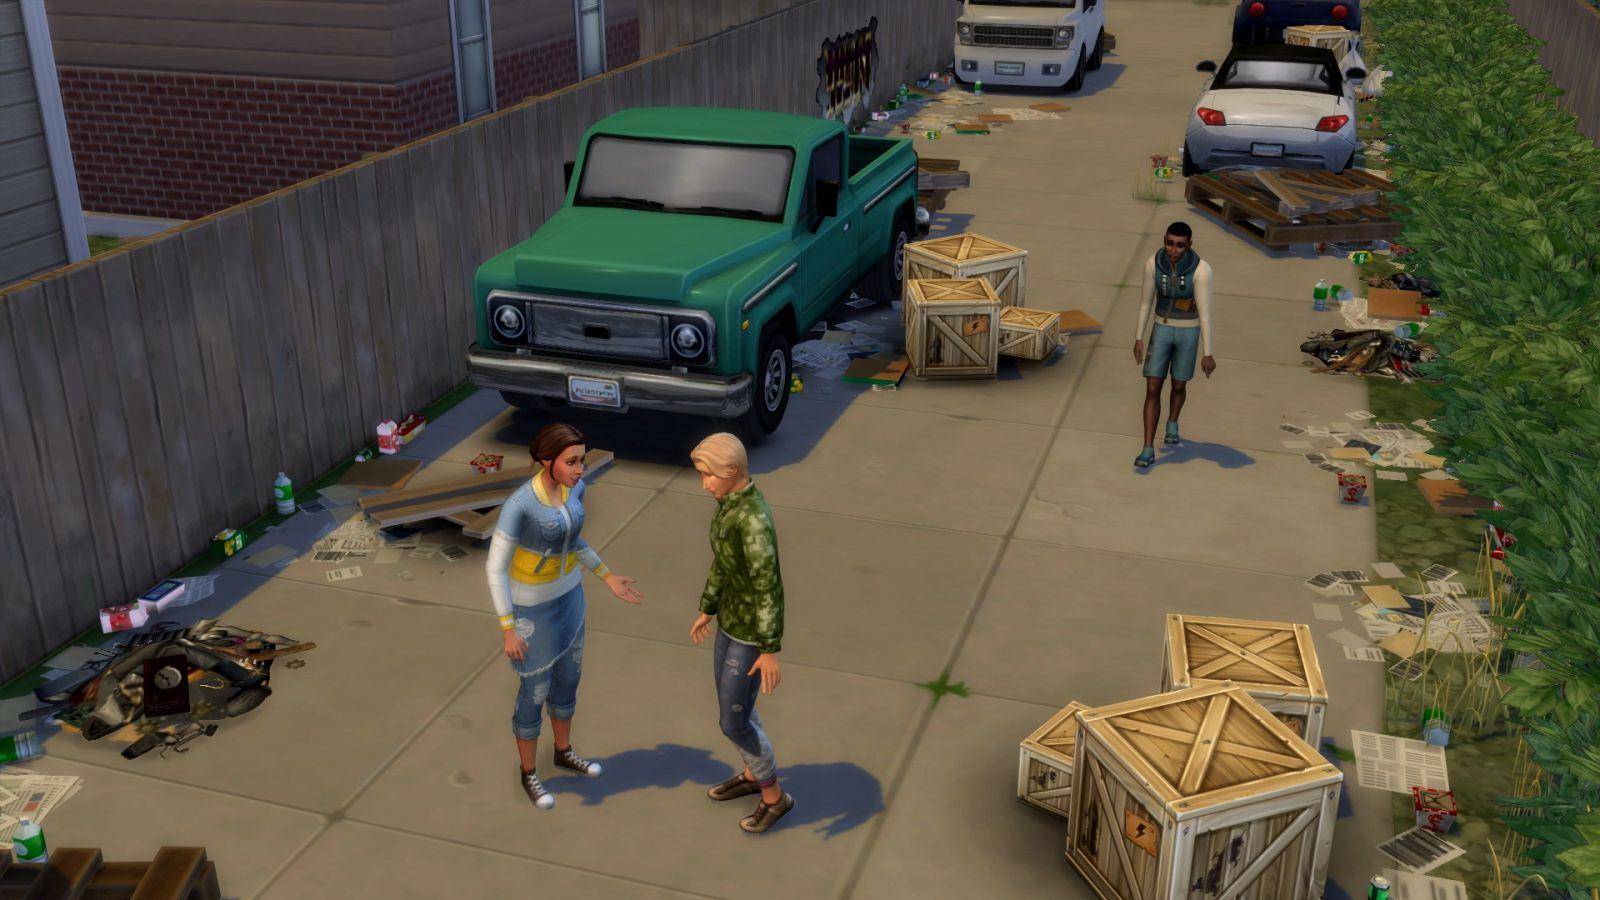 Sims 4 (Vida Ecológica)